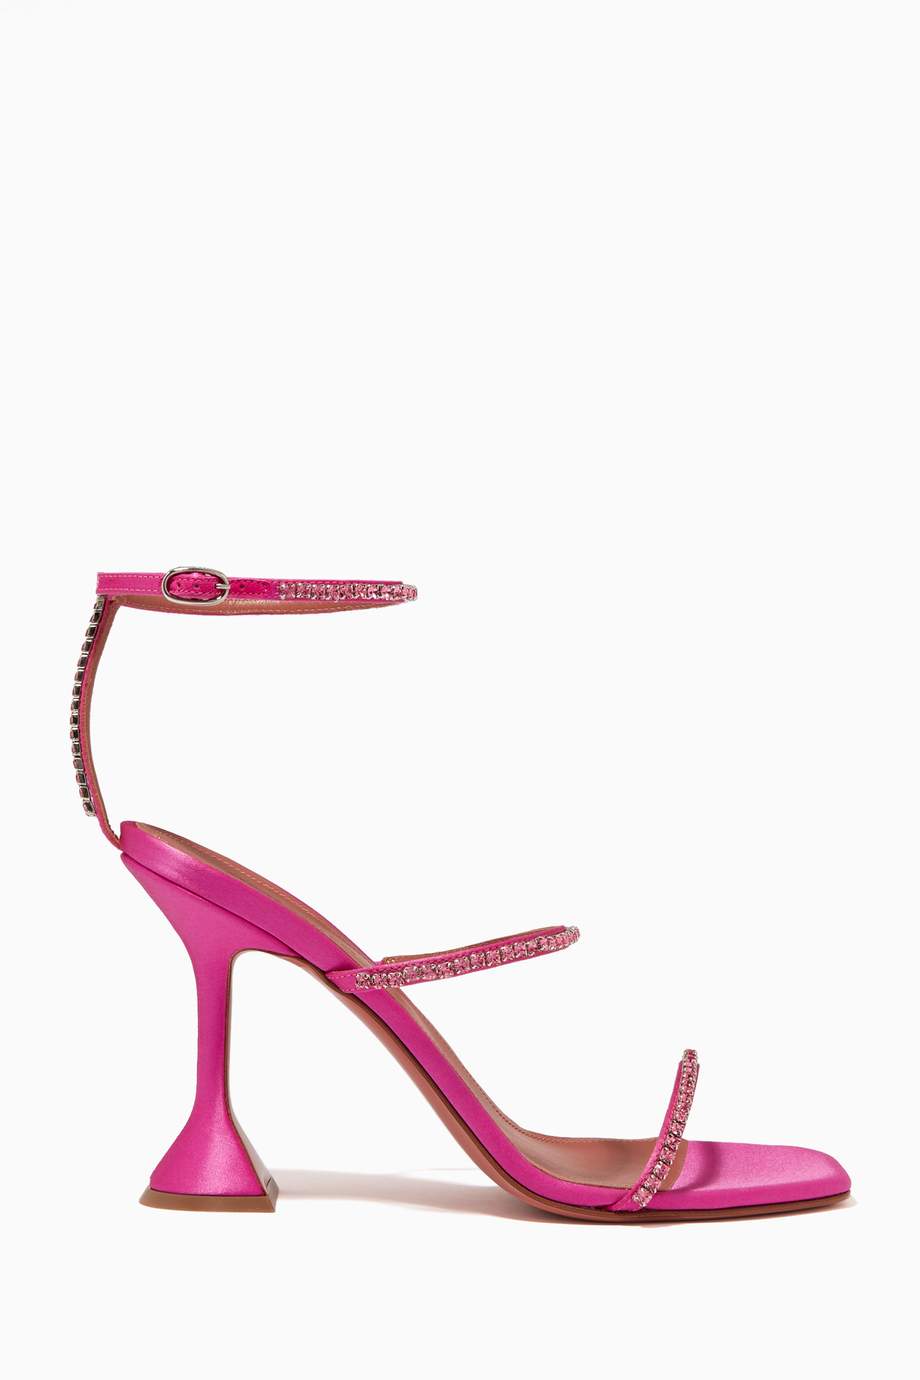 Shop Amina Muaddi Pink Gilda 95 Sandals in Satin for Women | Ounass UAE